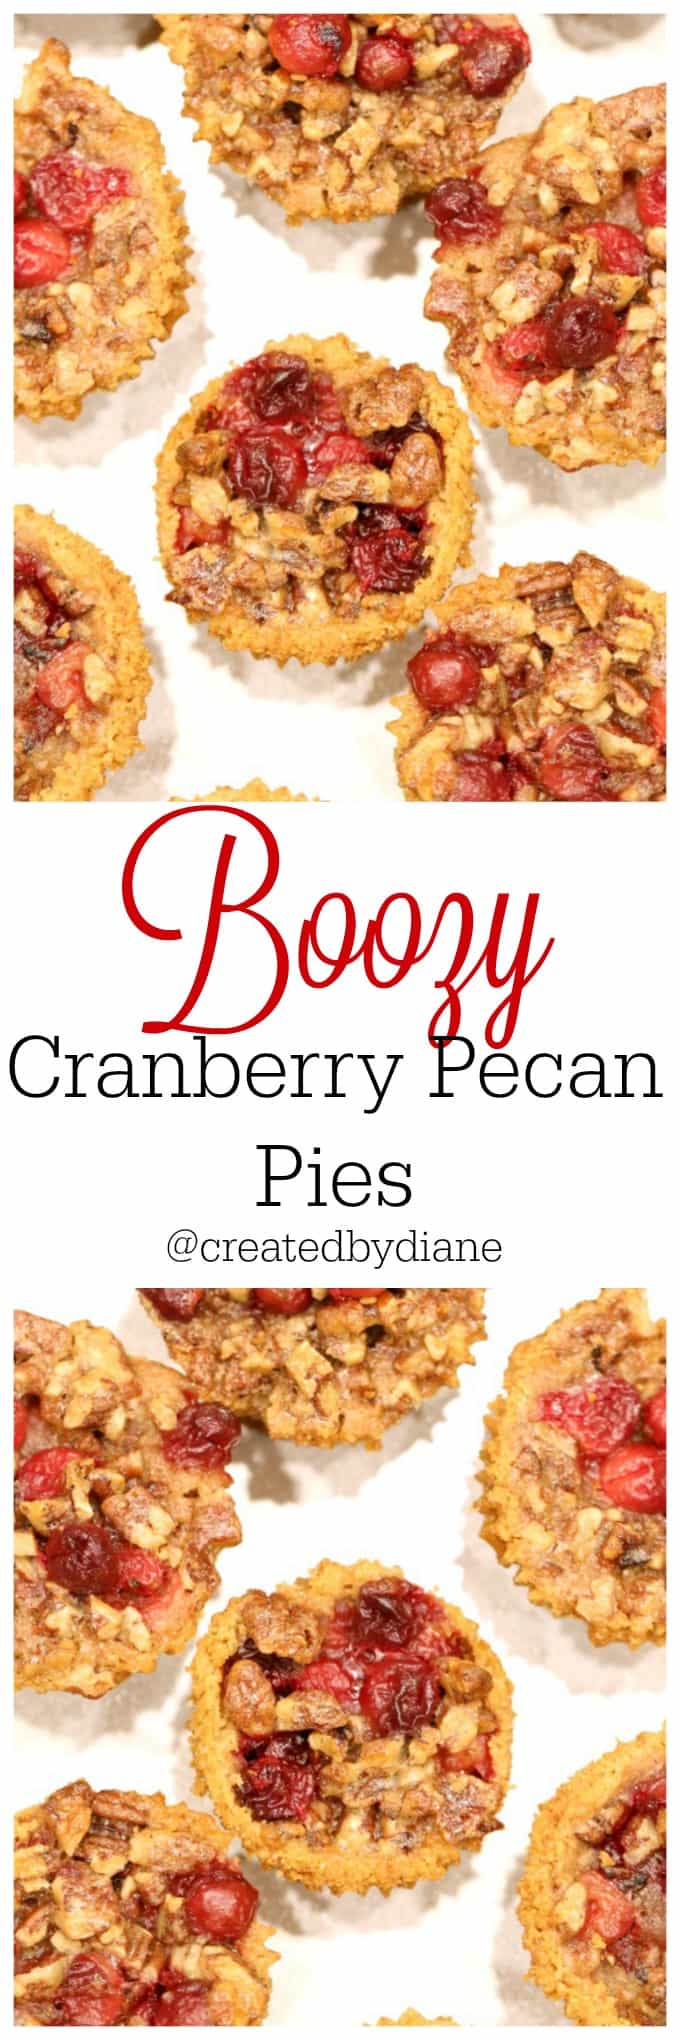 Boozy Cranberry Pecan Pies from @createdbydiane